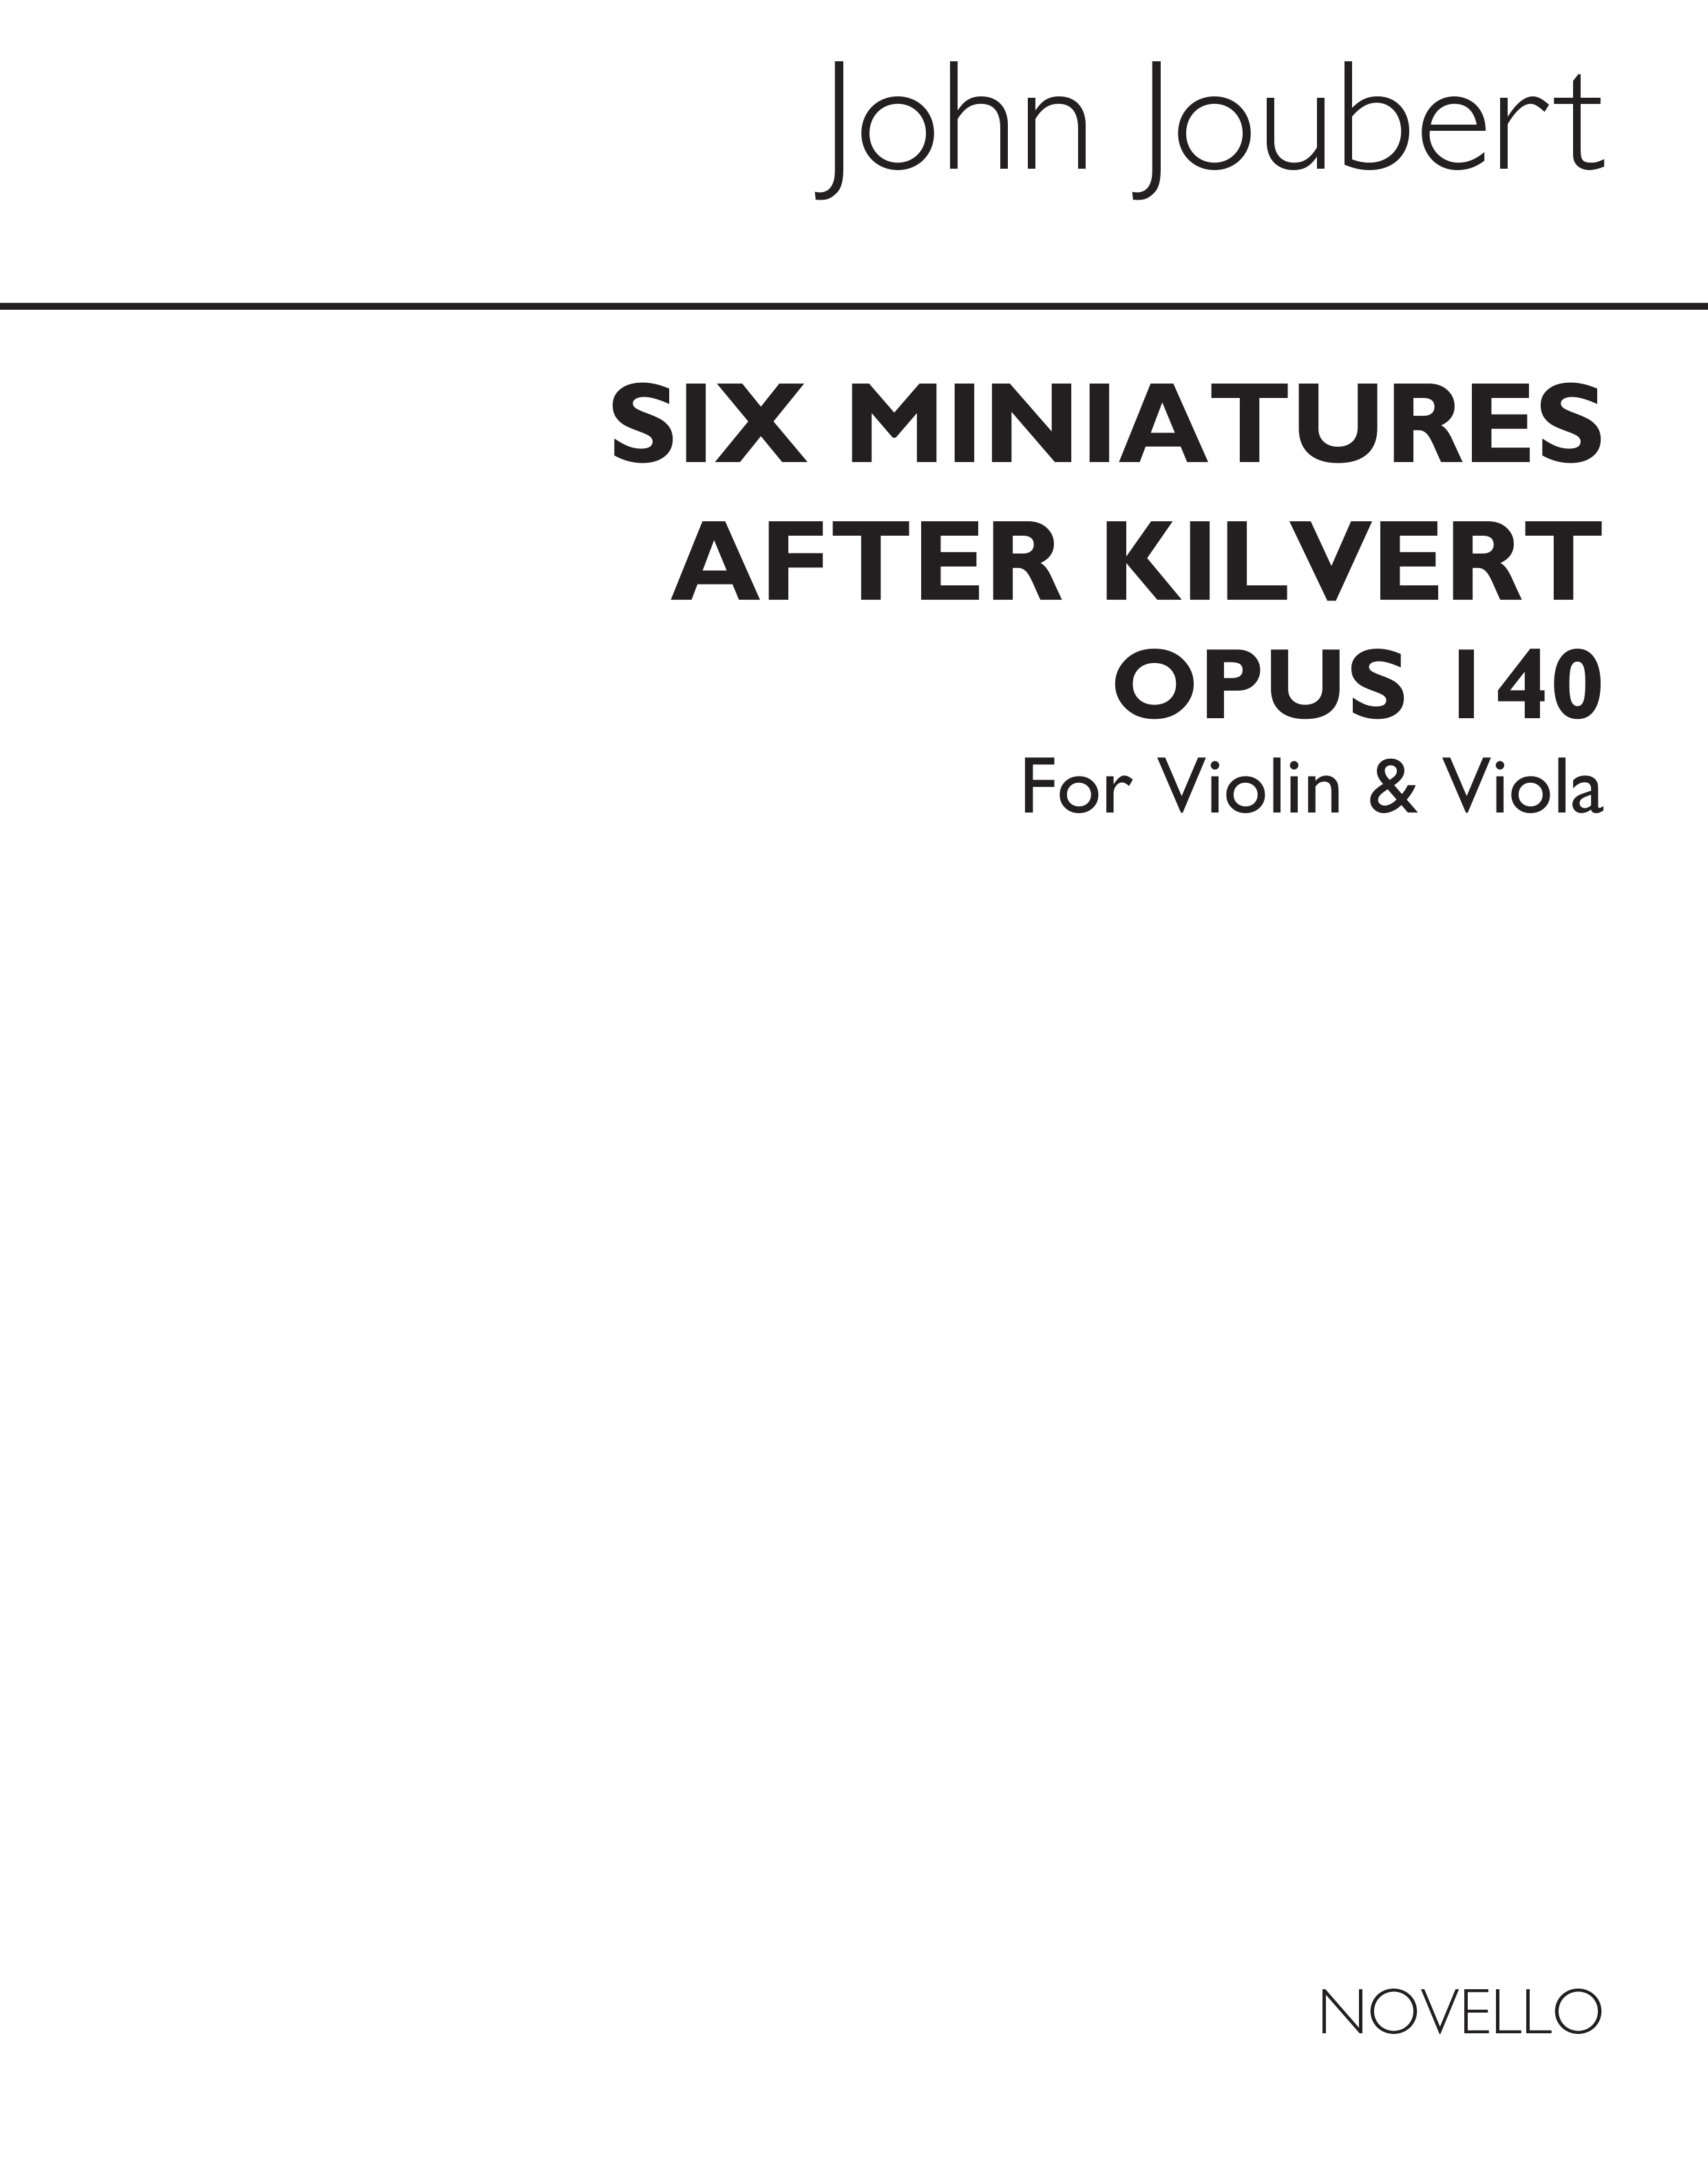 Joubert: Six Miniatures After Kilvert Op.140 (Violin and Viola Parts)